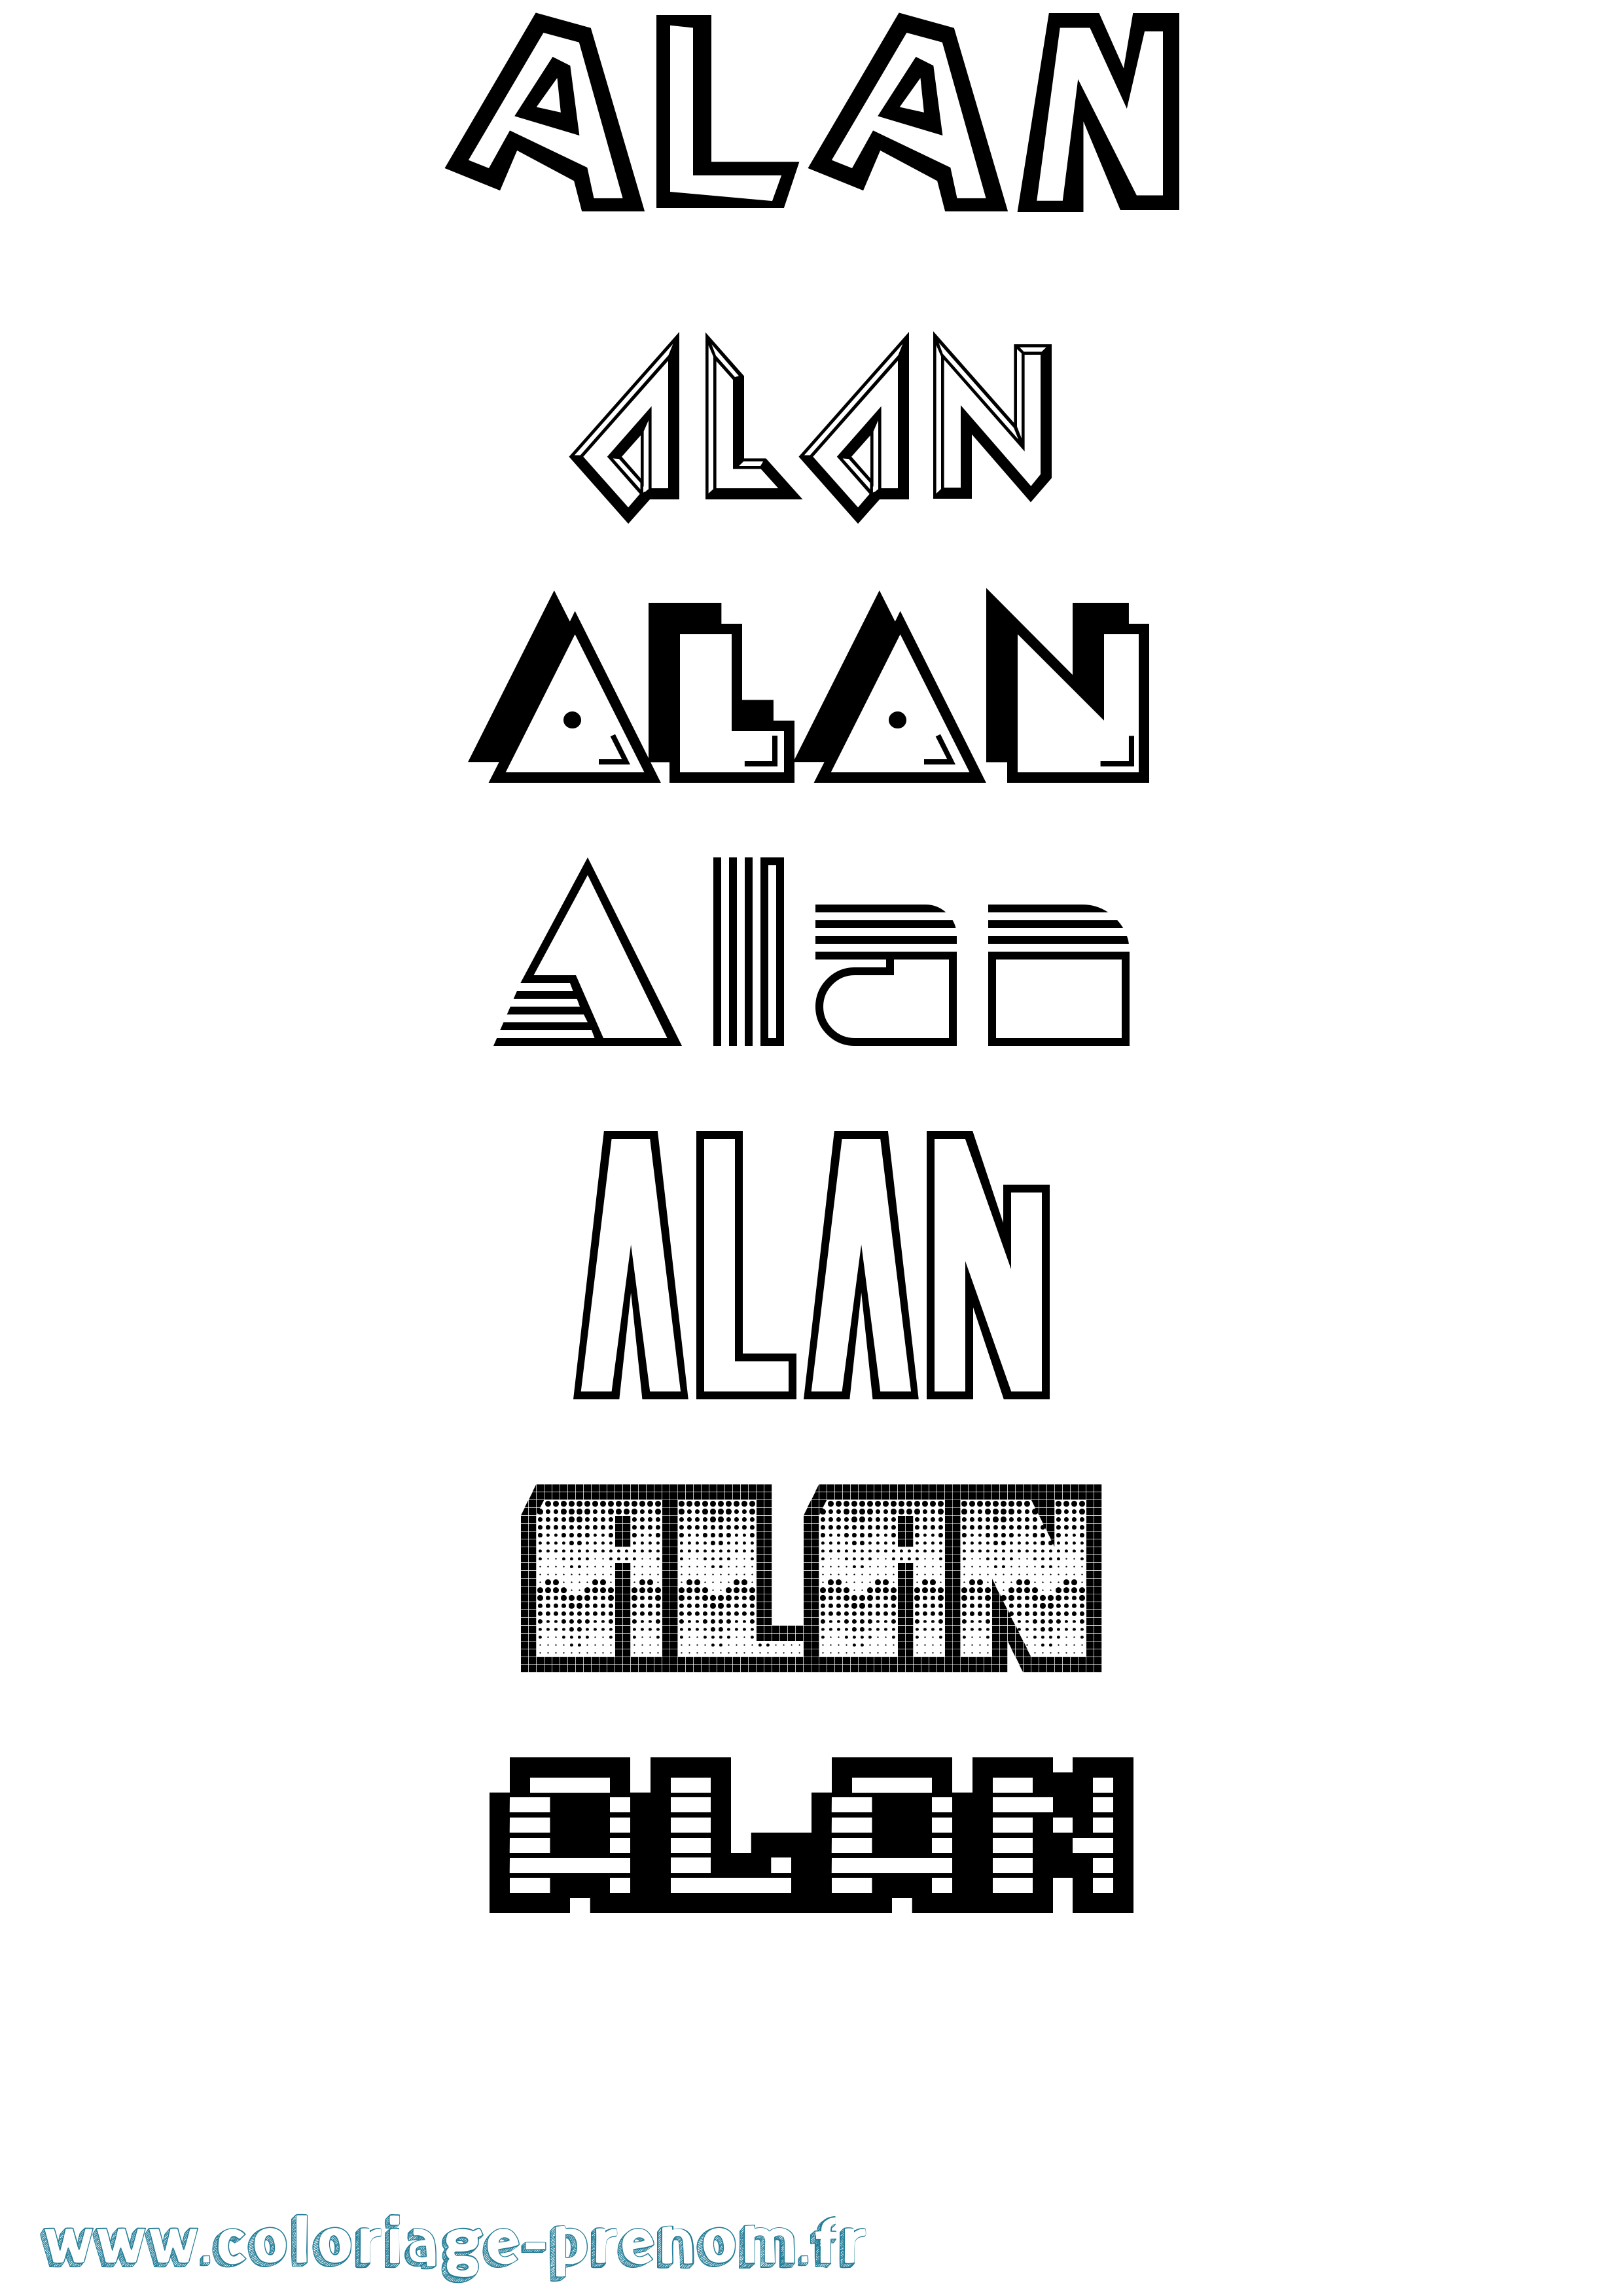 Coloriage prénom Alan